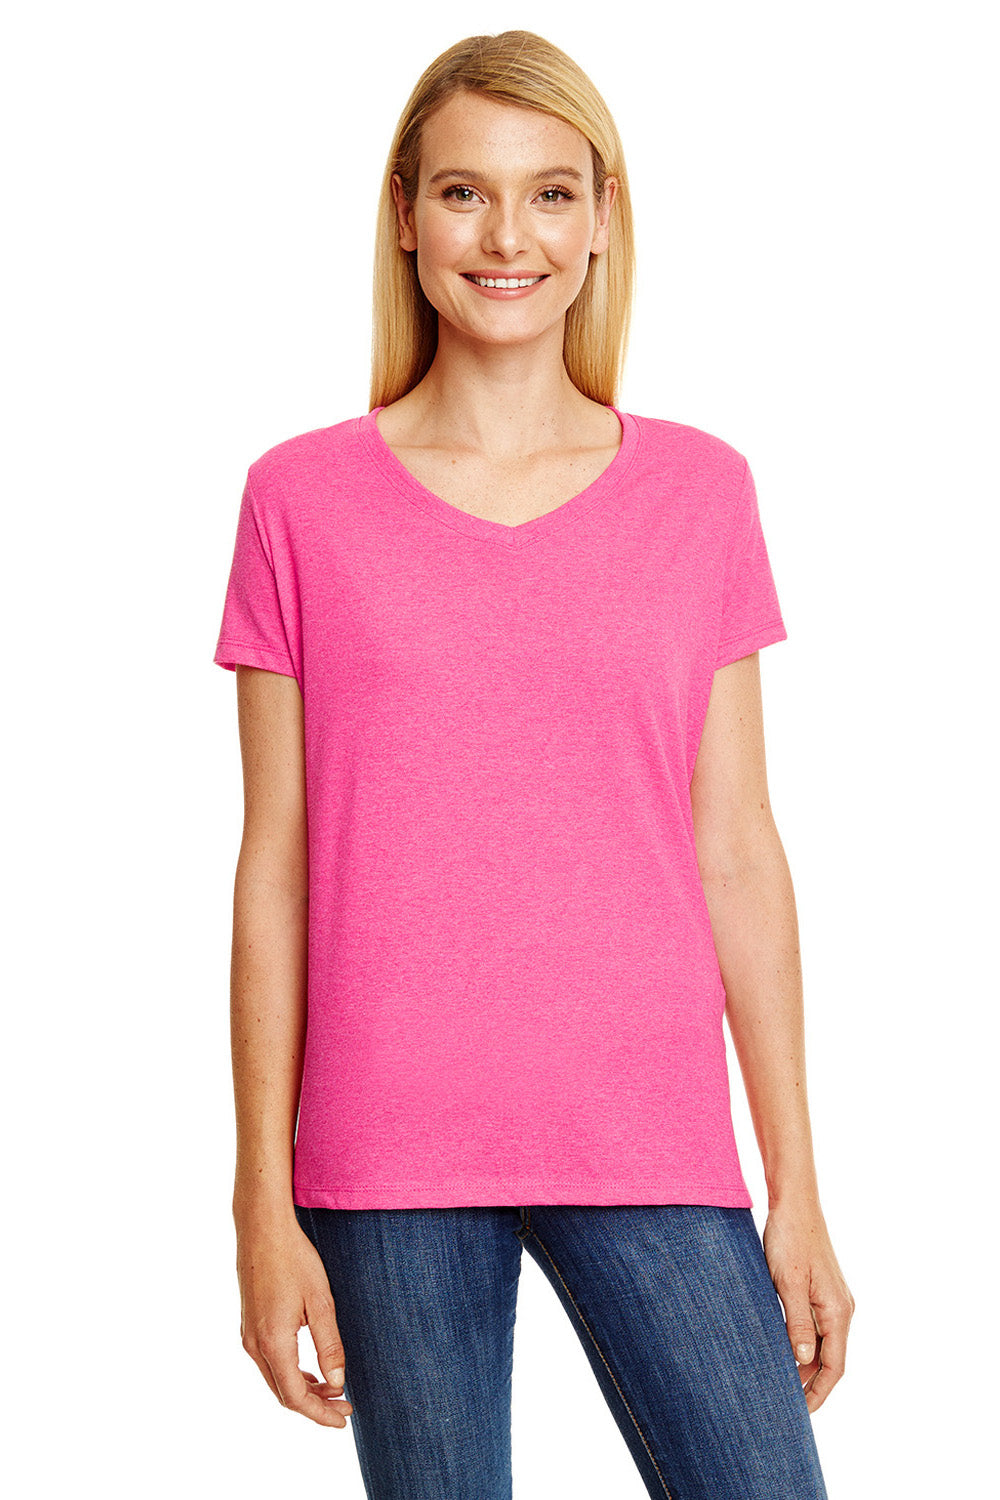 Hanes 42VT Womens X-Temp FreshIQ Moisture Wicking Short Sleeve V-Neck T-Shirt Pink Front